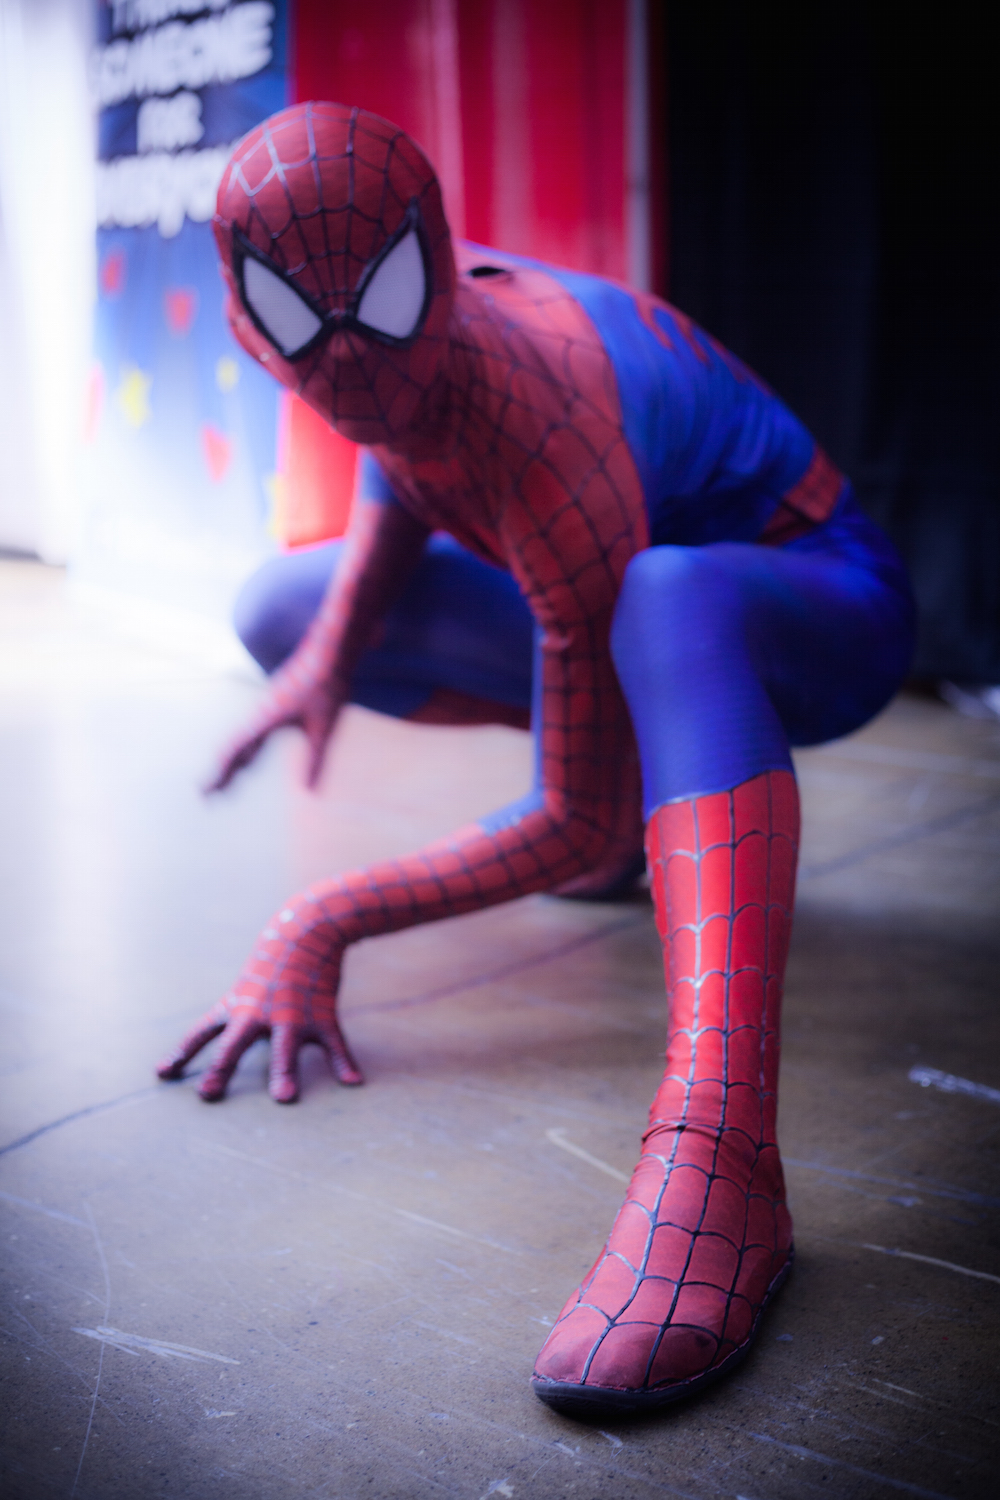 Spider Man cosplay photographs